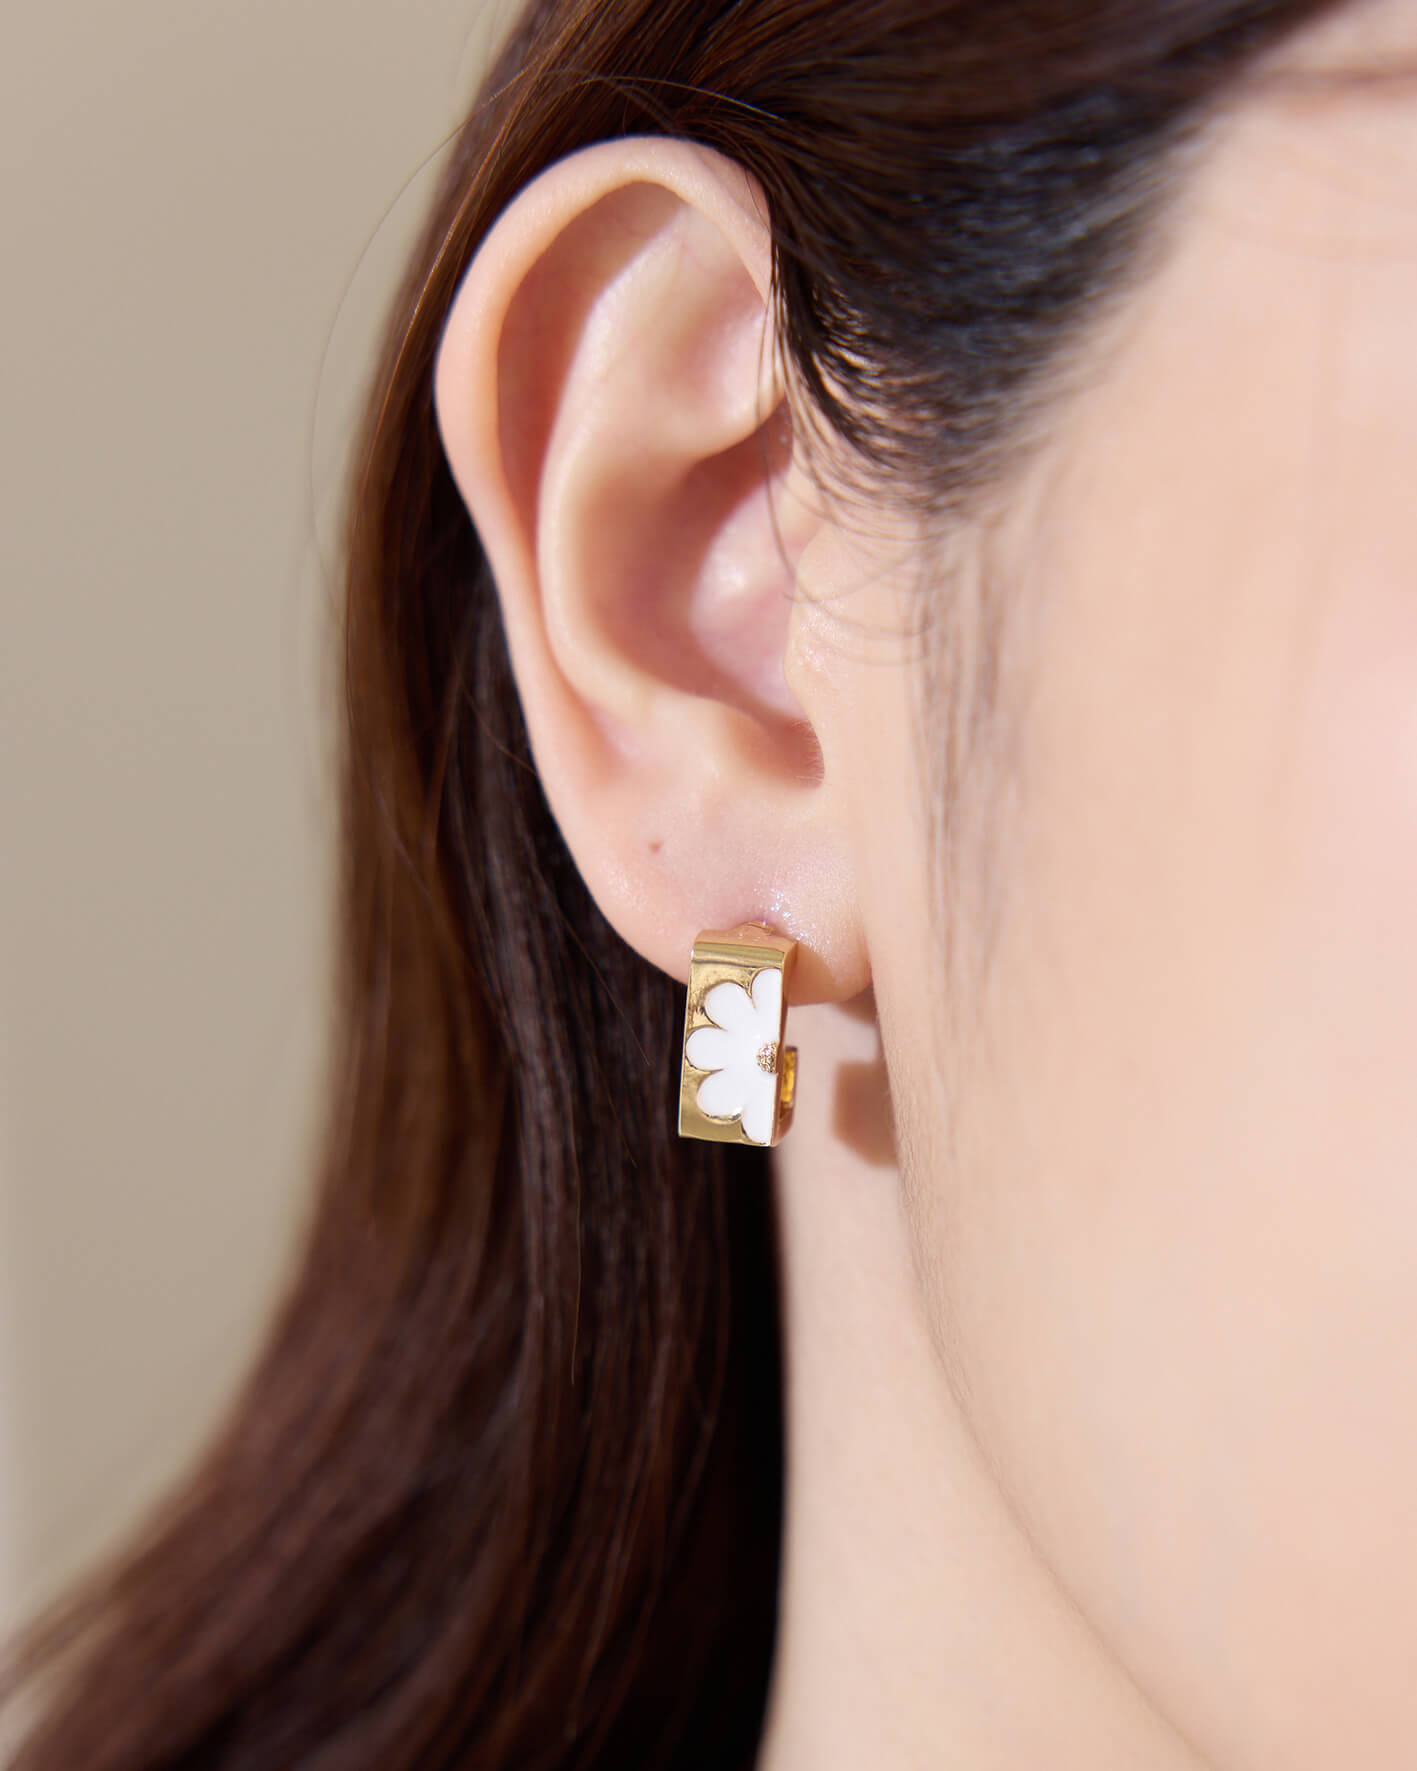 Eco安珂,韓國飾品,韓國耳環,耳針式耳環,C圈耳環,氣質耳環,釉彩耳環